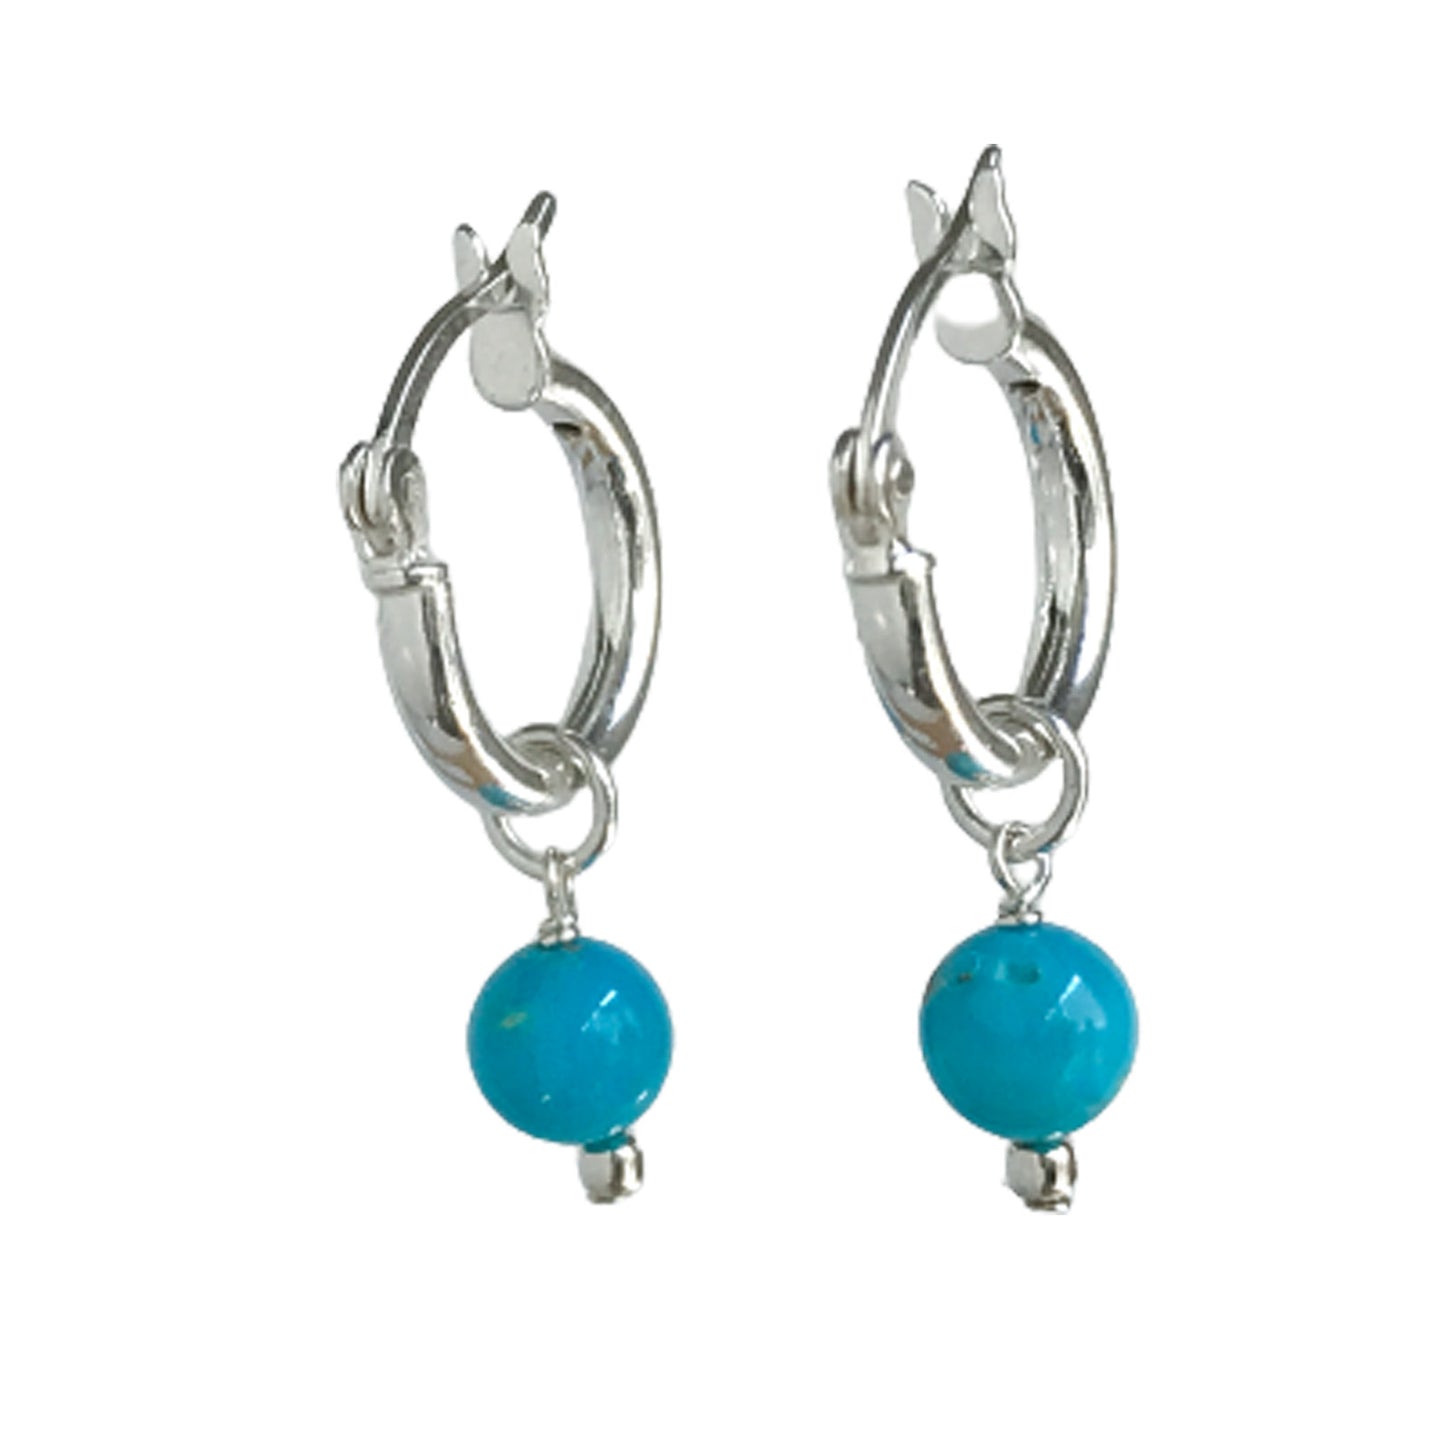 Turquoise Huggie Earrings - Sterling Silver or Gold Filled Small Hoop Earrings